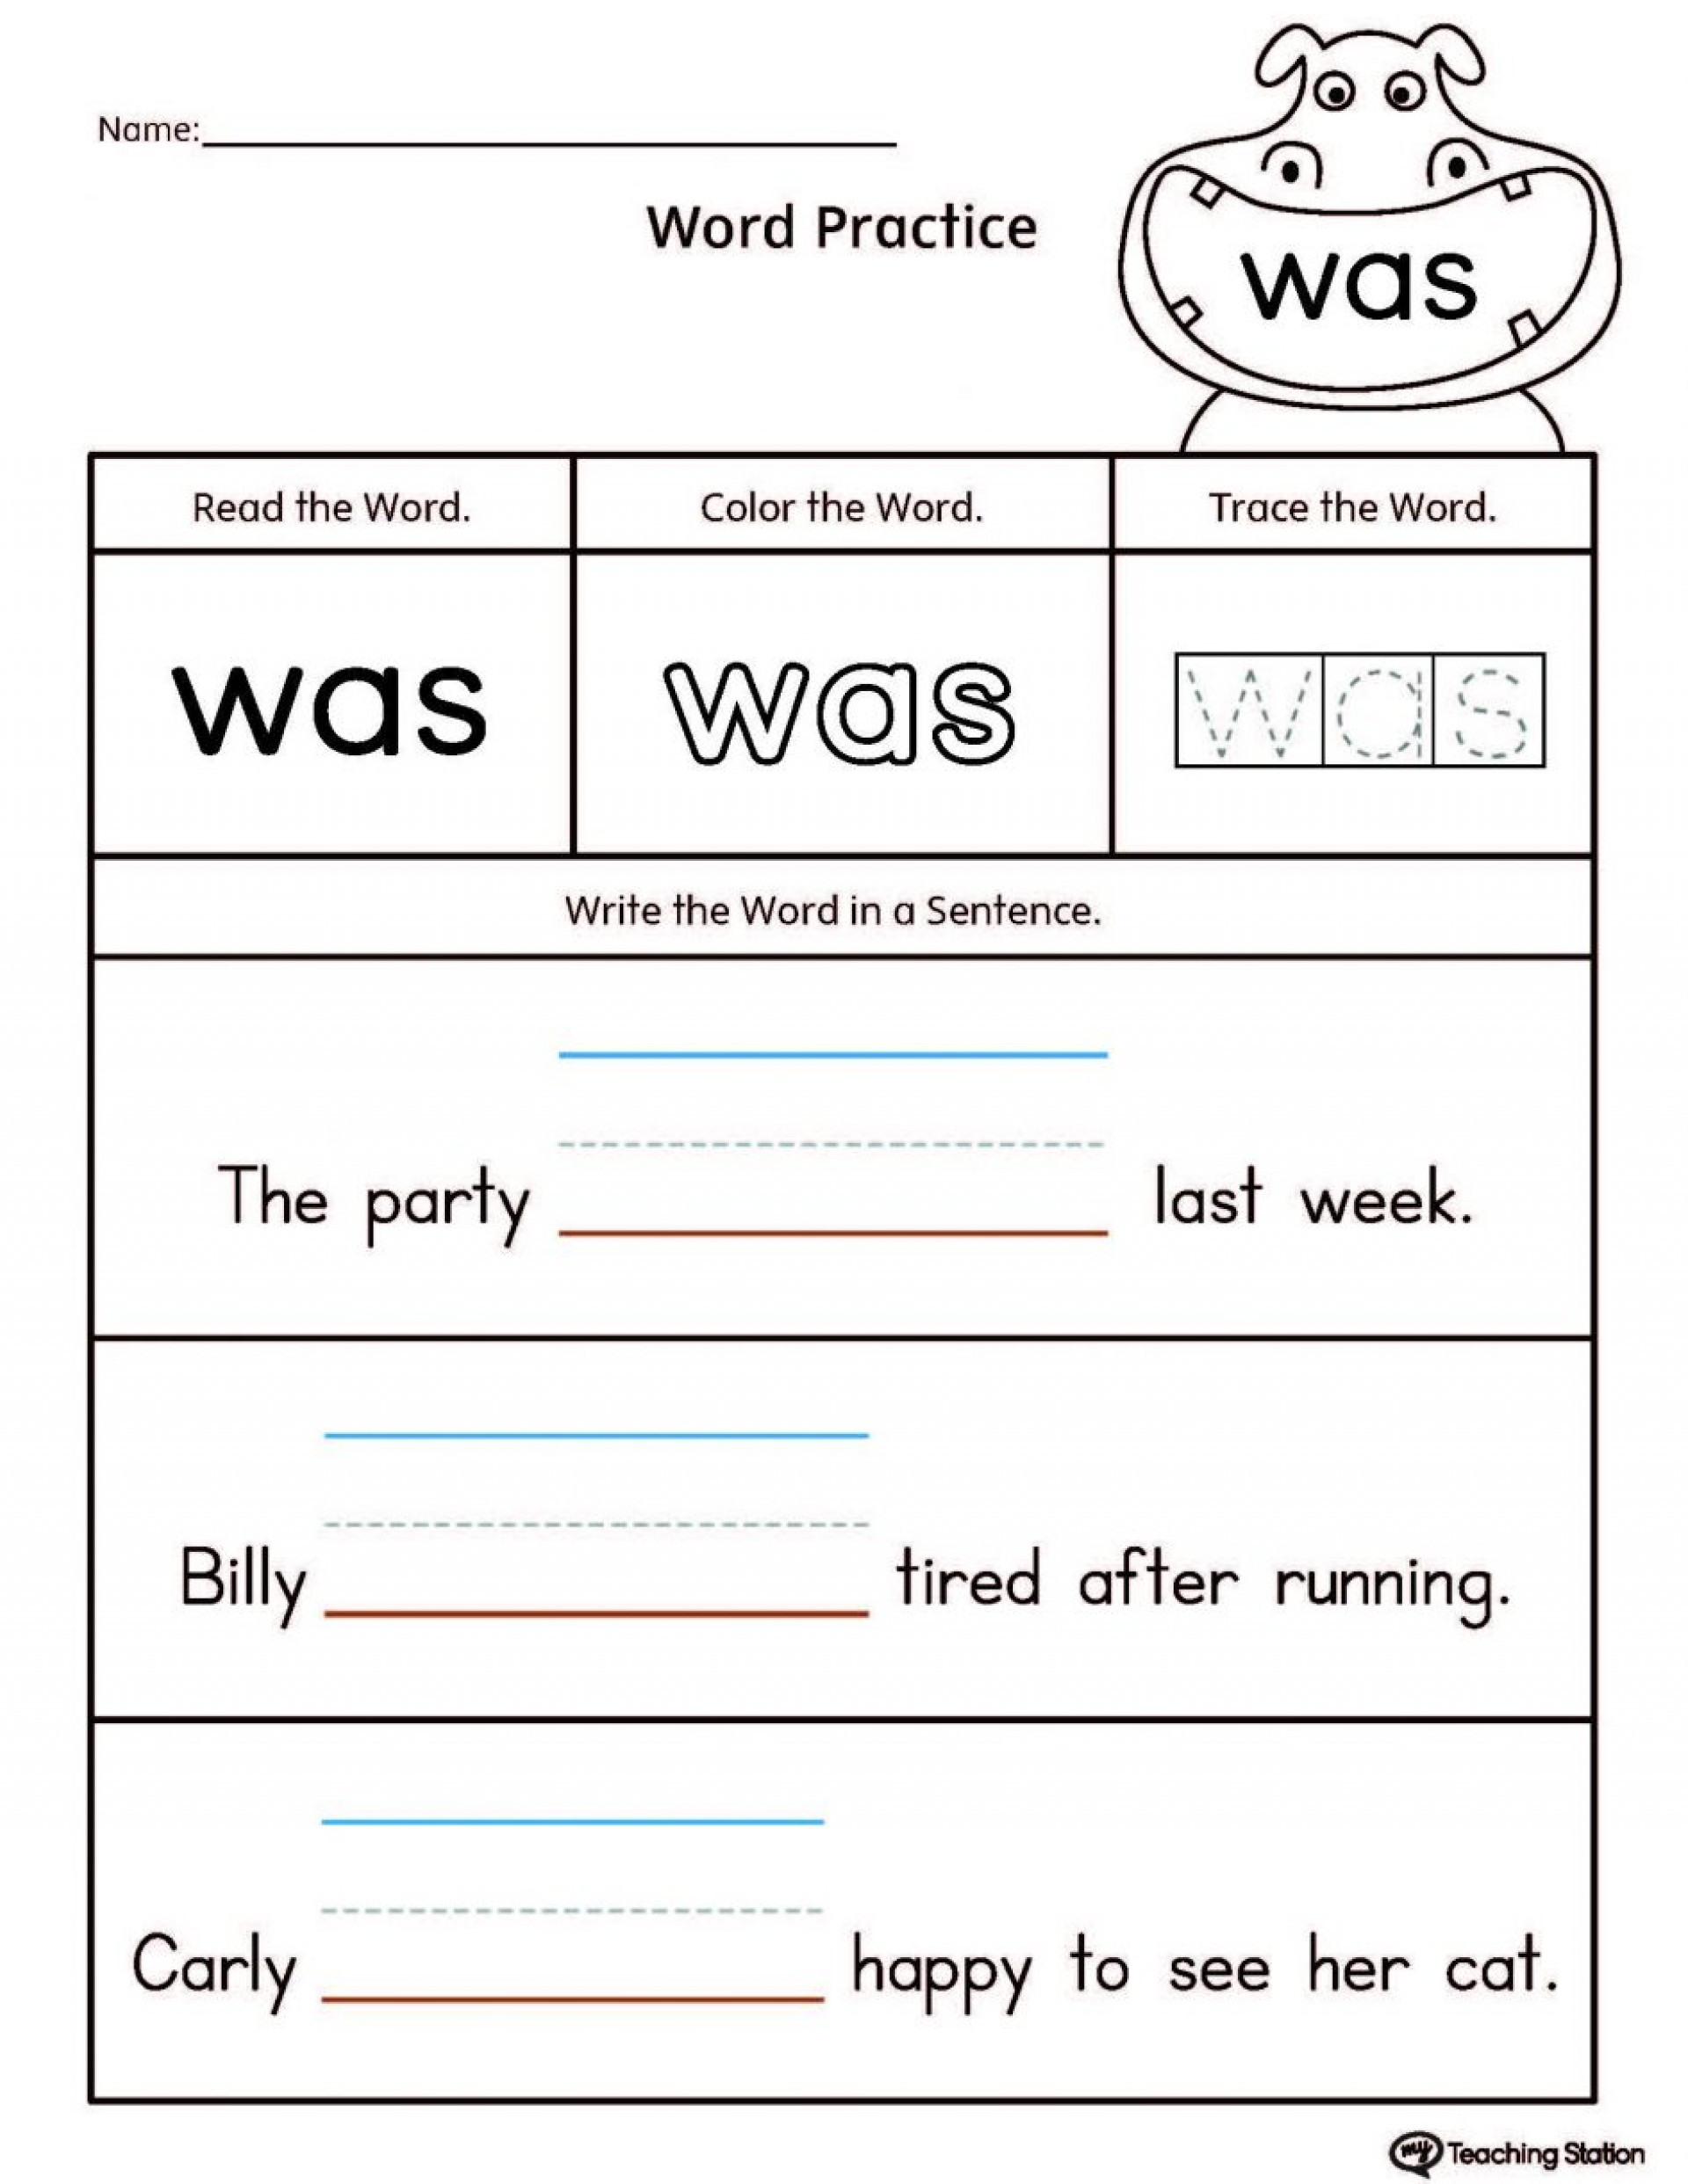 printable kindergarten worksheets